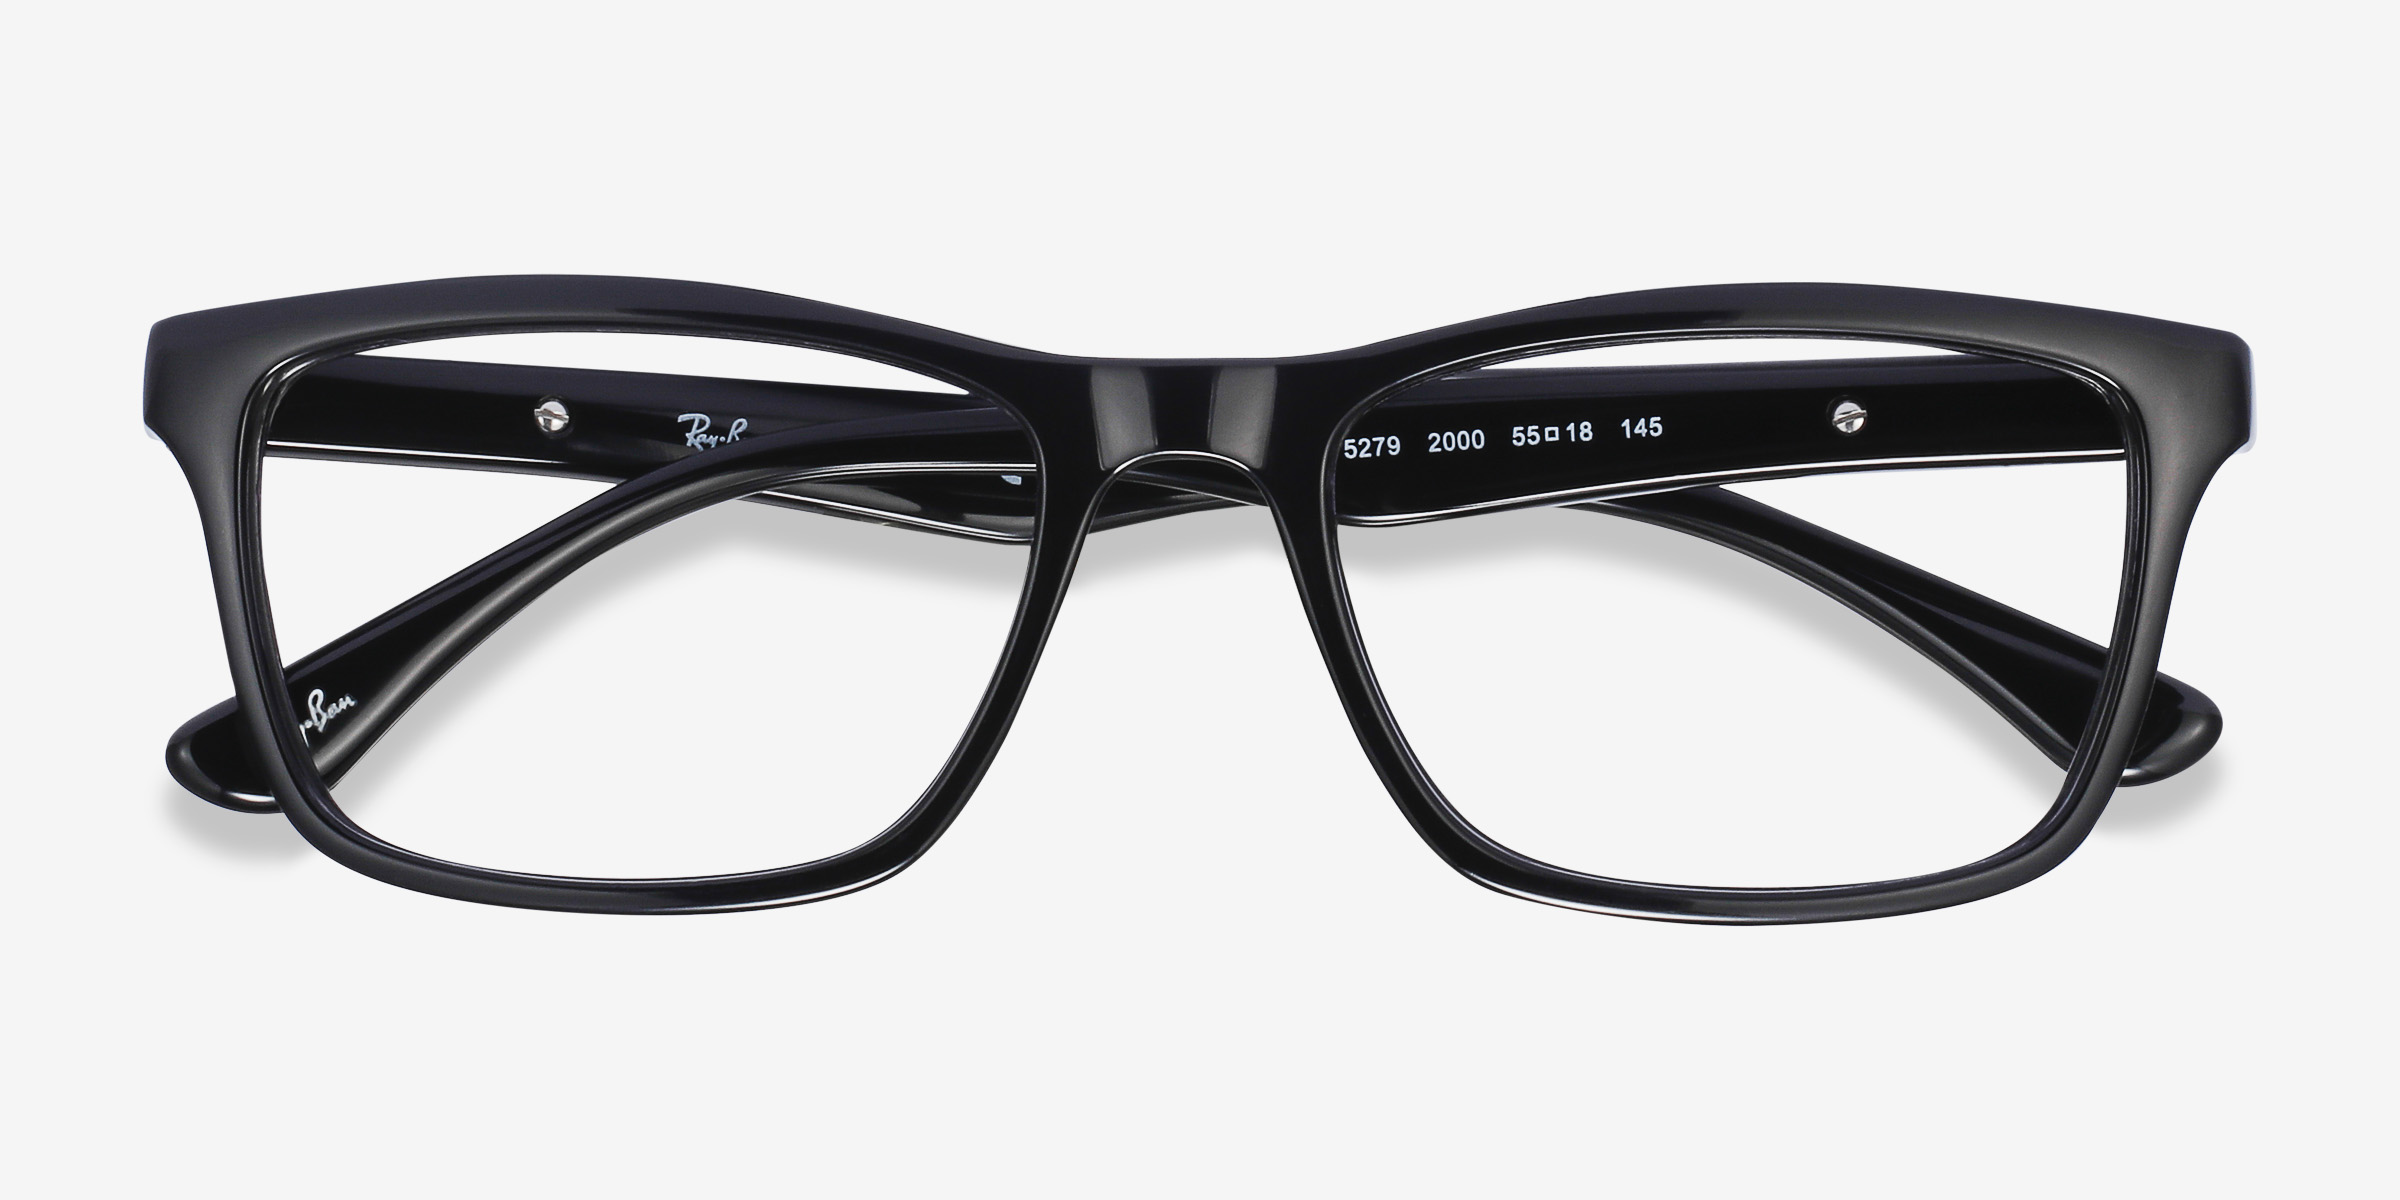 Ray-Ban RB5279 - Rectangle Black Frame Eyeglasses | Eyebuydirect Canada